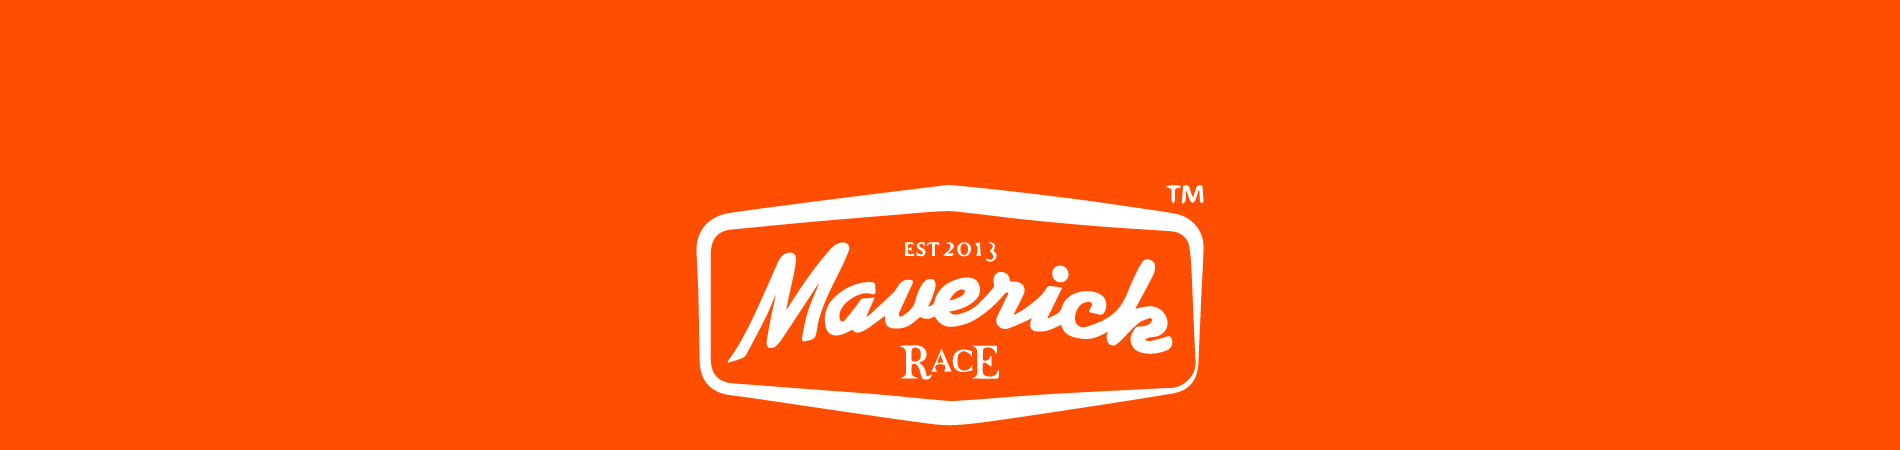 Maverick x TRIBE Run Free Surrey 2020